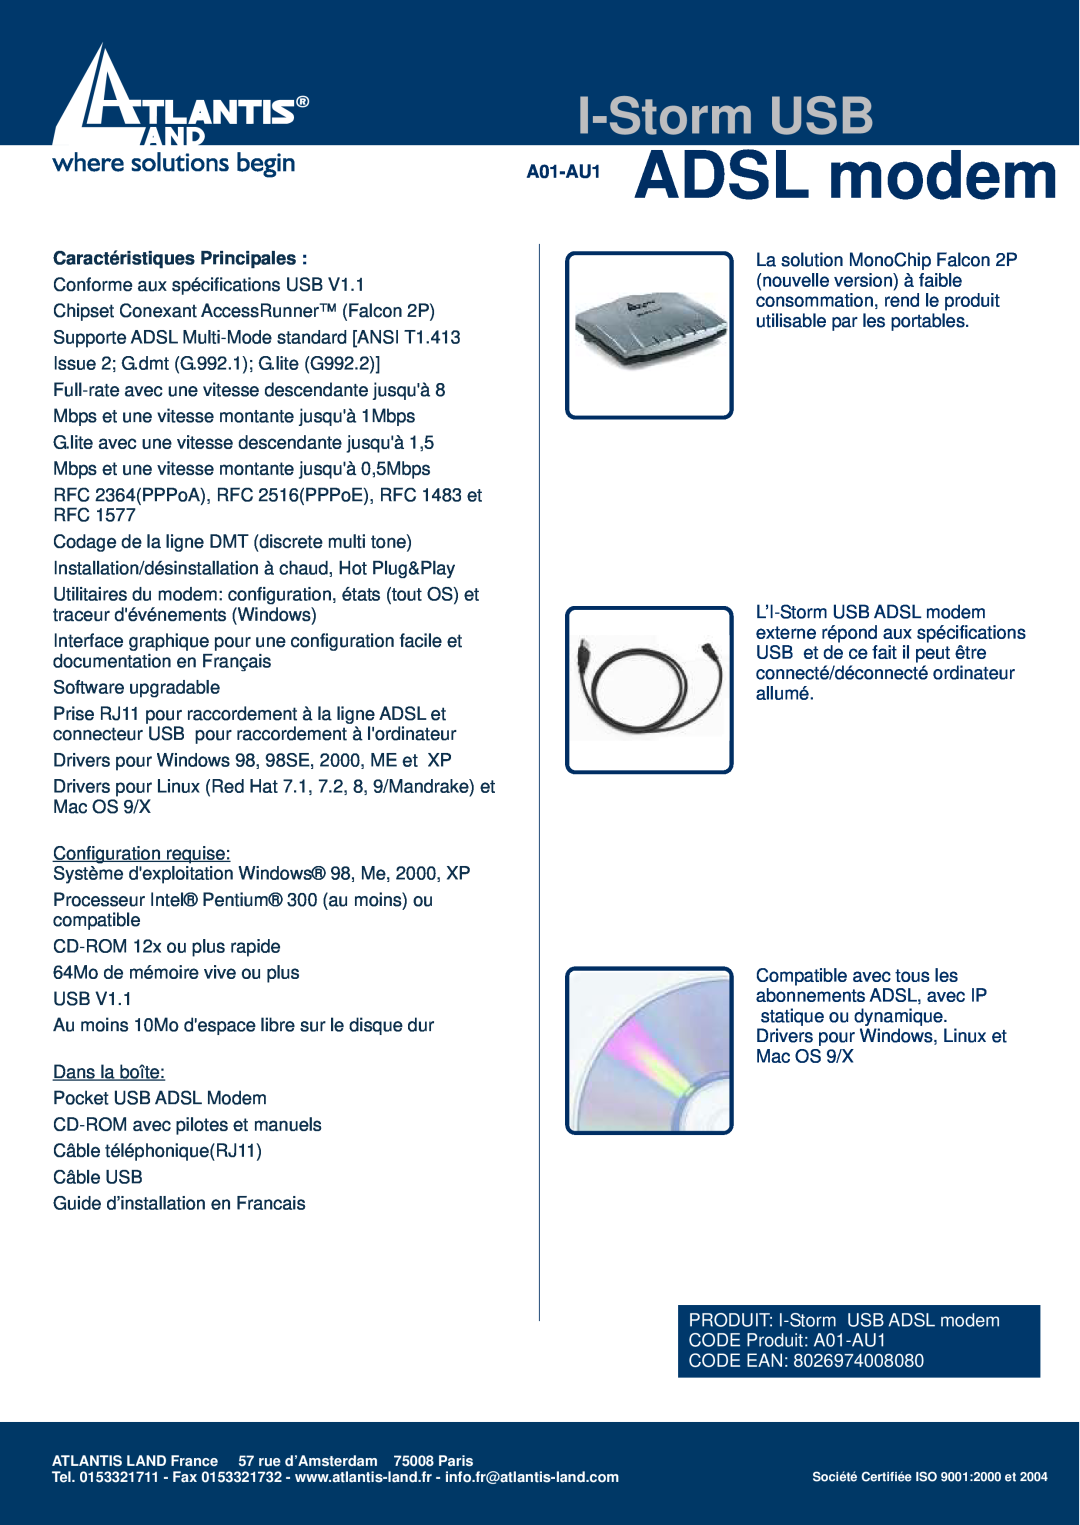 Atlantis Land dimensions Caractéristiques Principales, A01-AU1 ADSL modem, I-Storm USB 